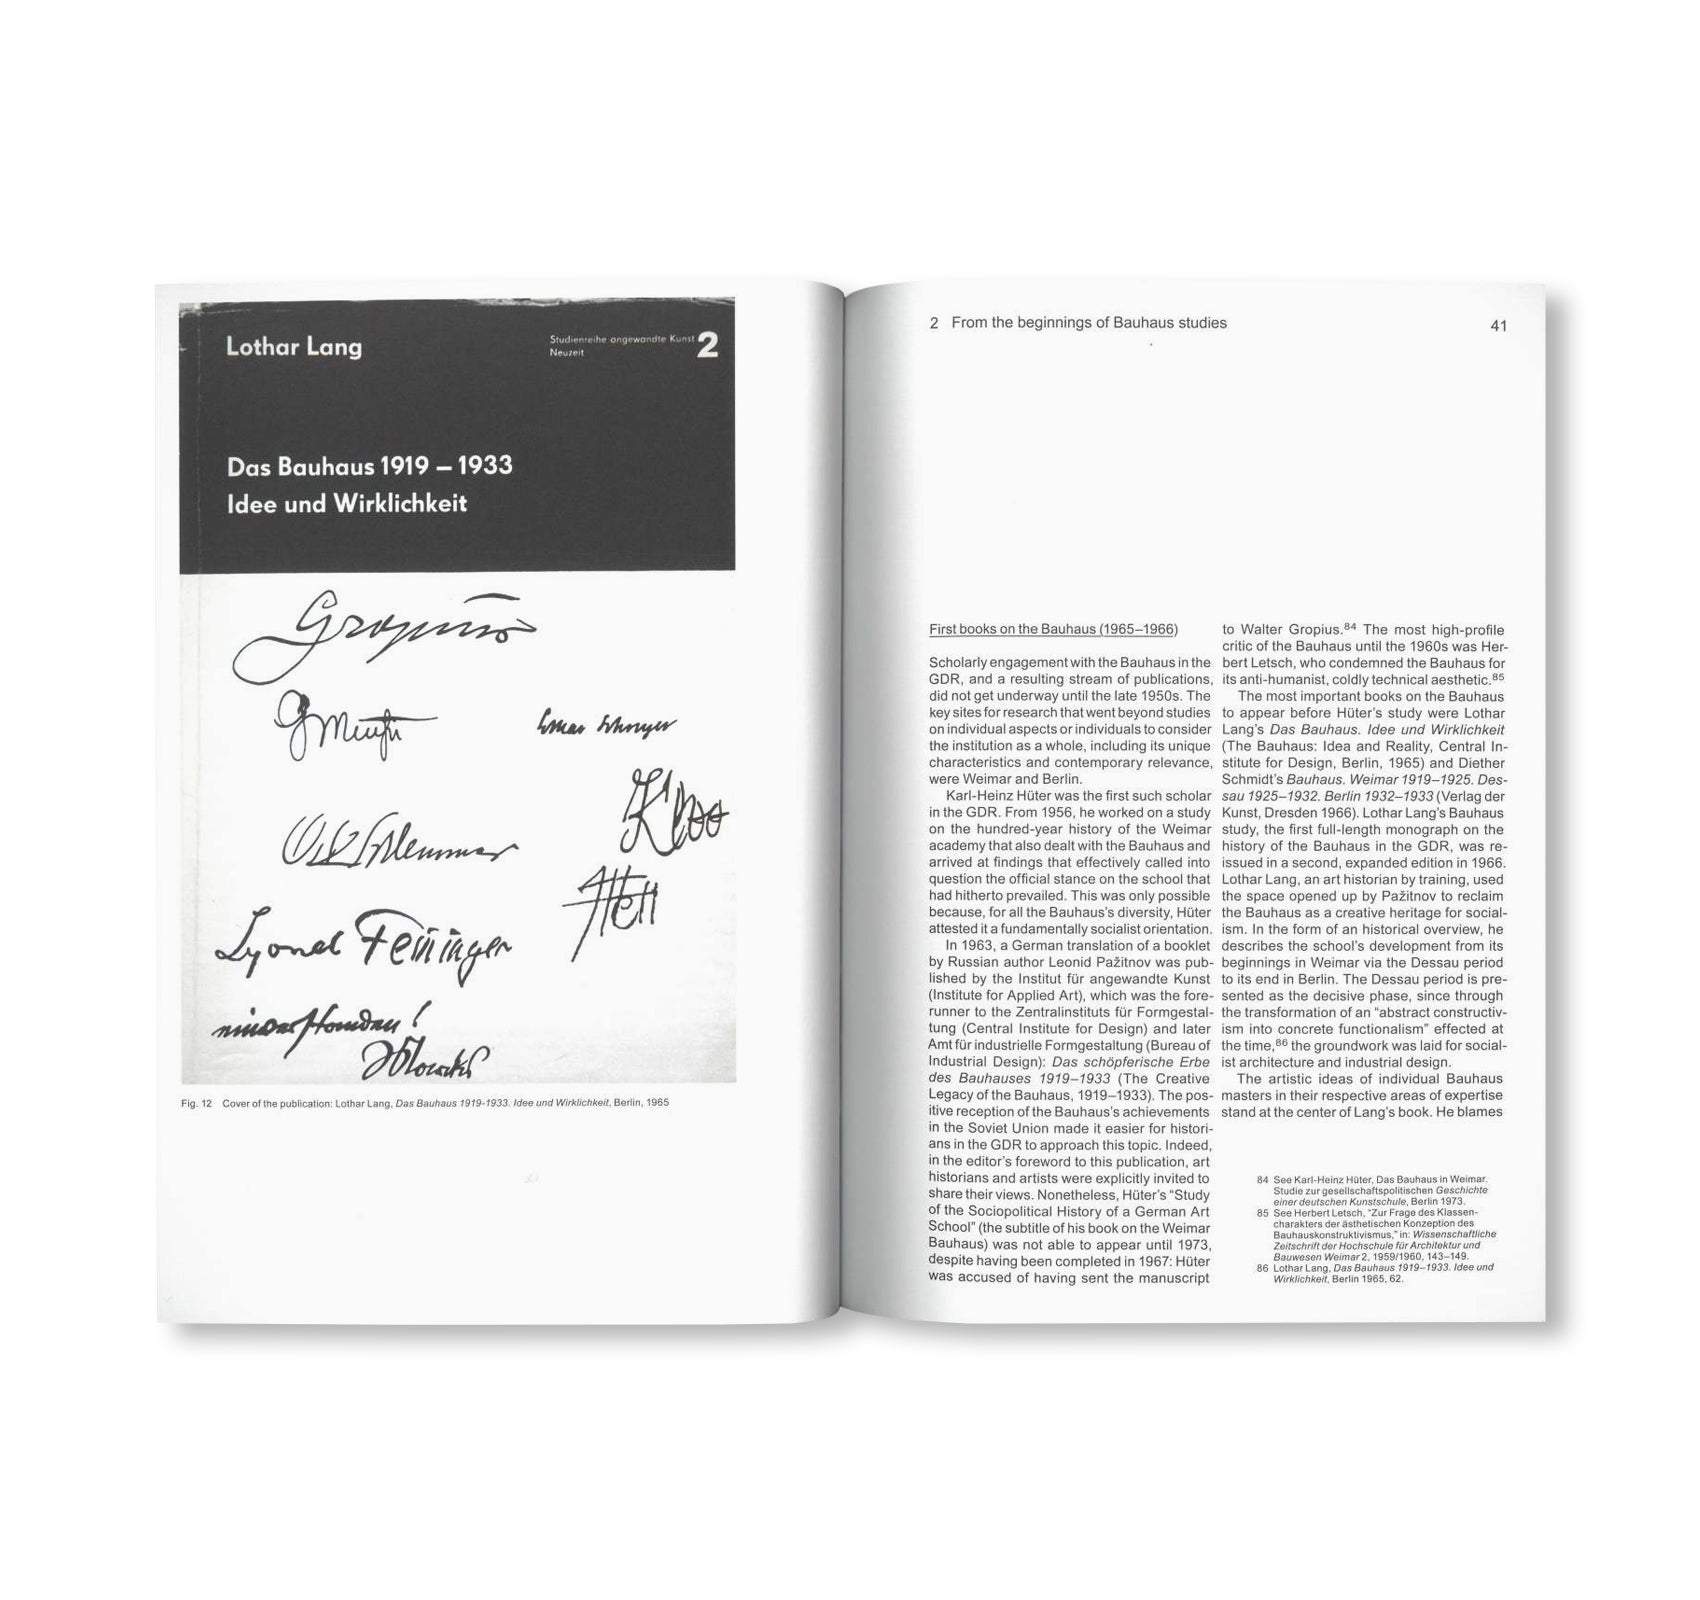 THE PROGRESSIVE HERITAGE OF THE BAUHAUS - ON THE ORIGINS OF AN EAST GERMAN BAUHAUS COLLECTION / Edition Bauhaus 54 by Stiftung Bauhaus Dessau